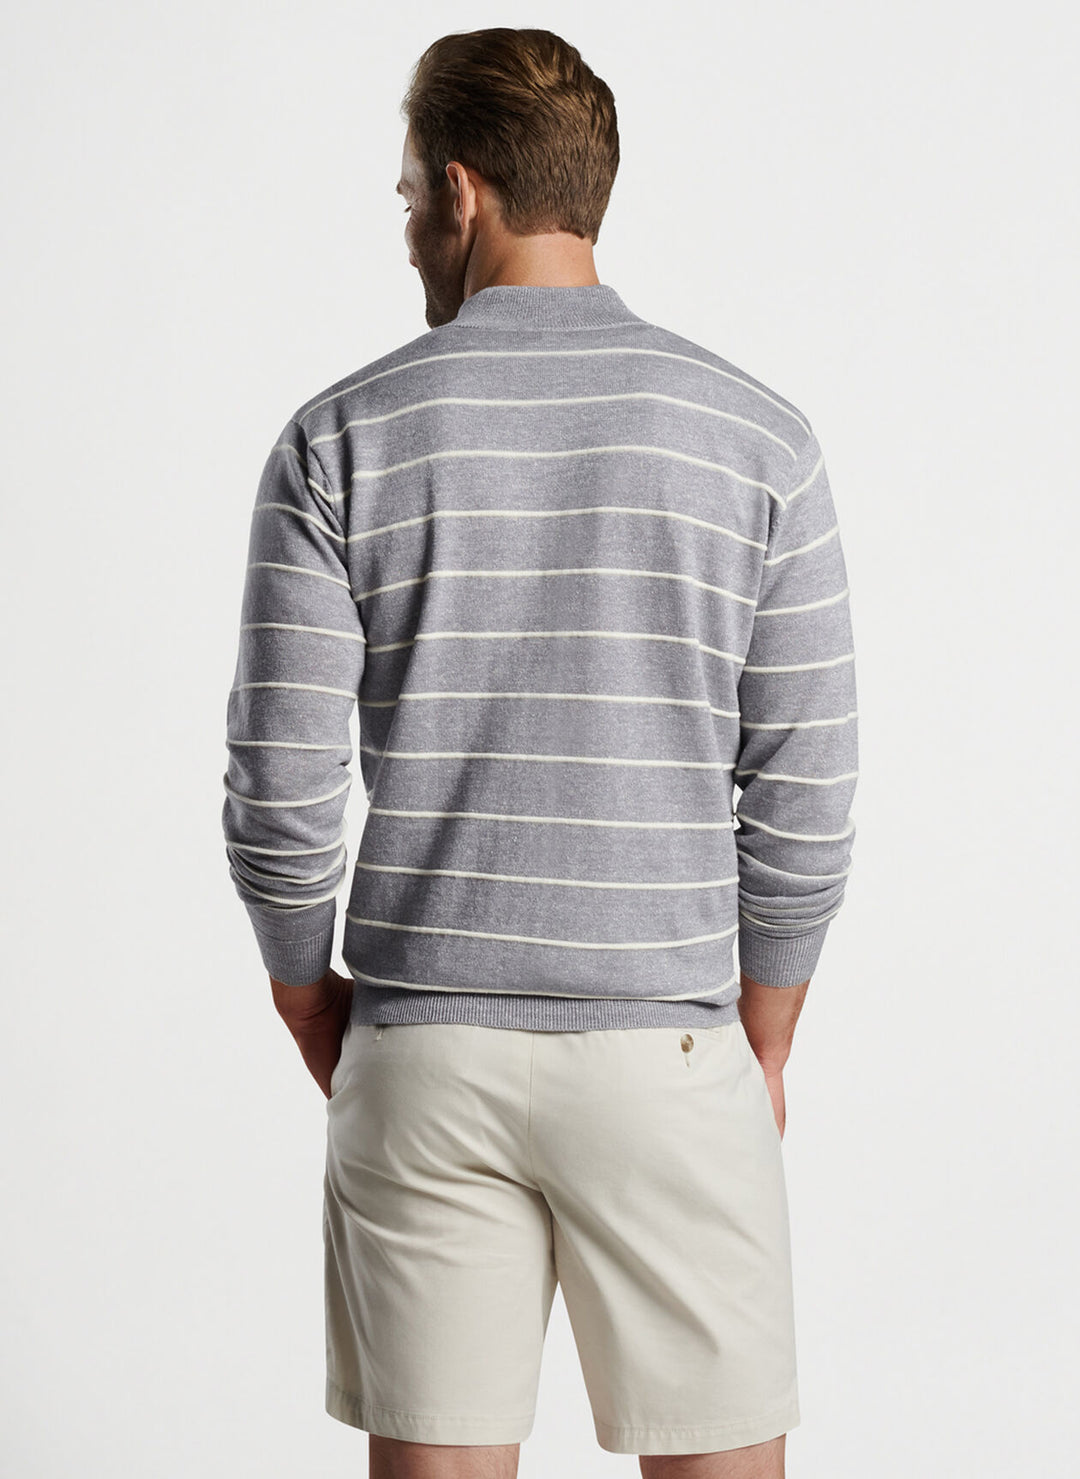 Peter Millar Eastham Striped Quarter-Zip Sweater